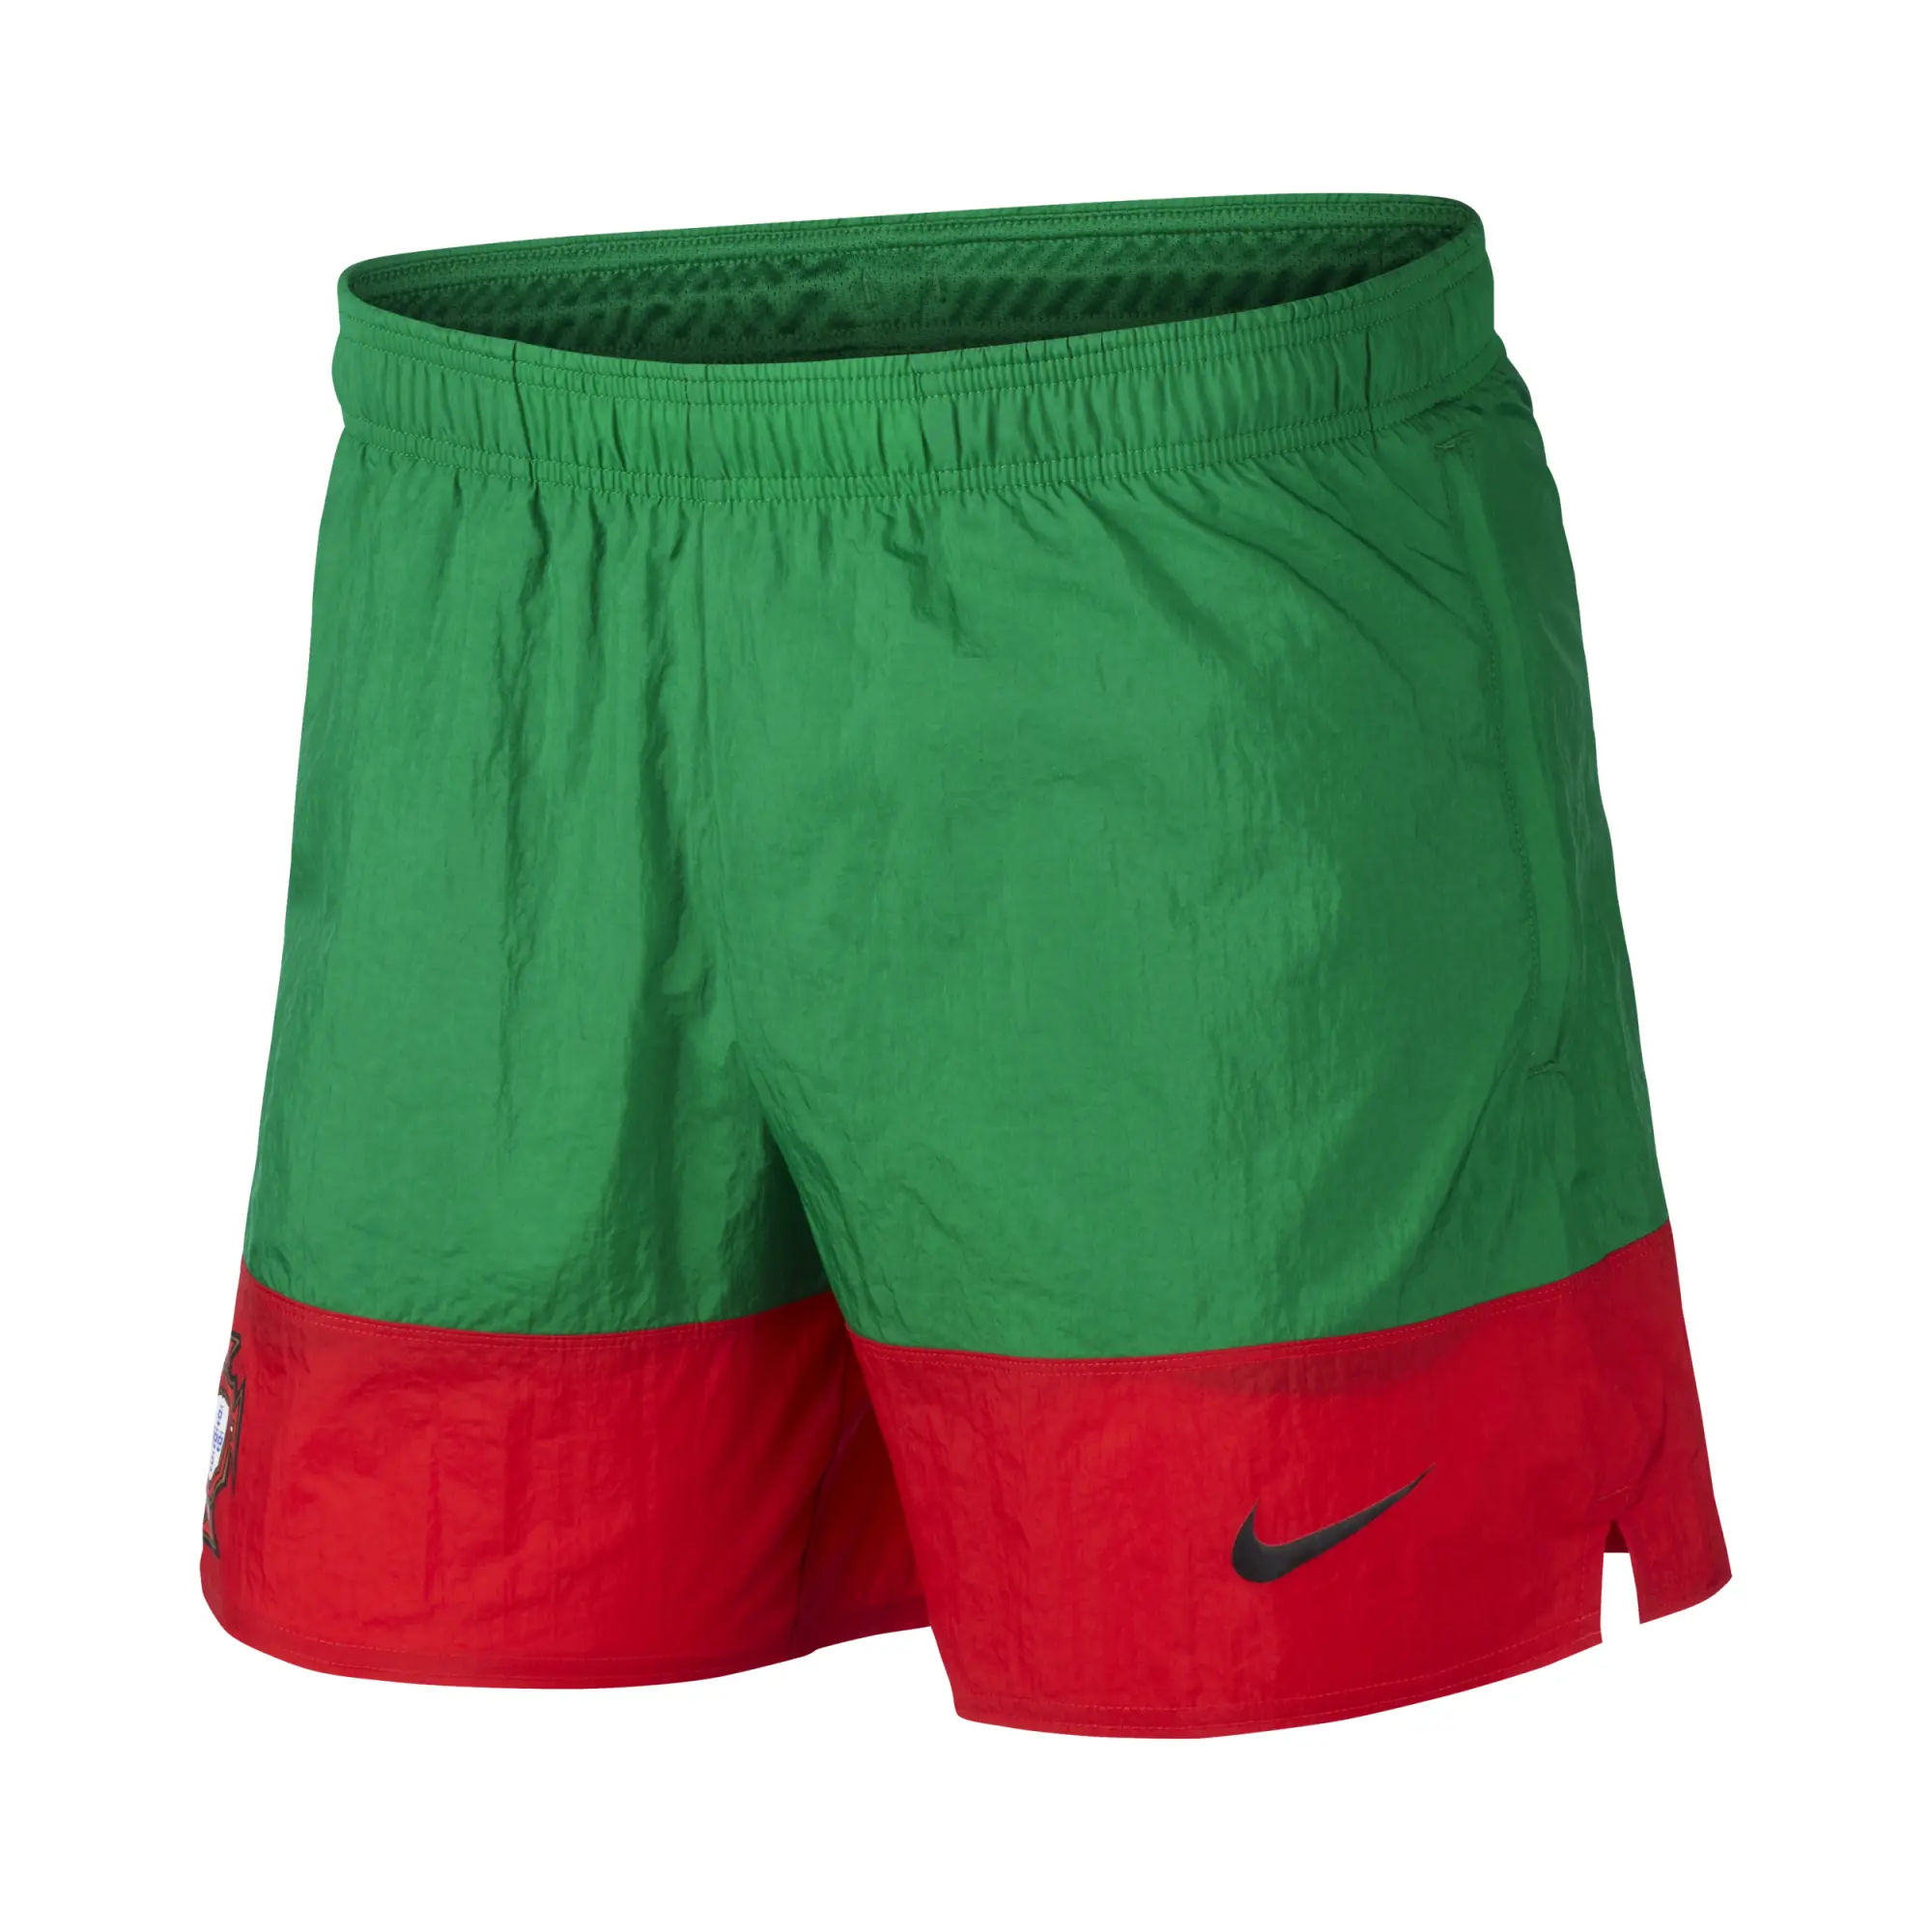 Nike Portugal Woven Football Shorts Mens - Green